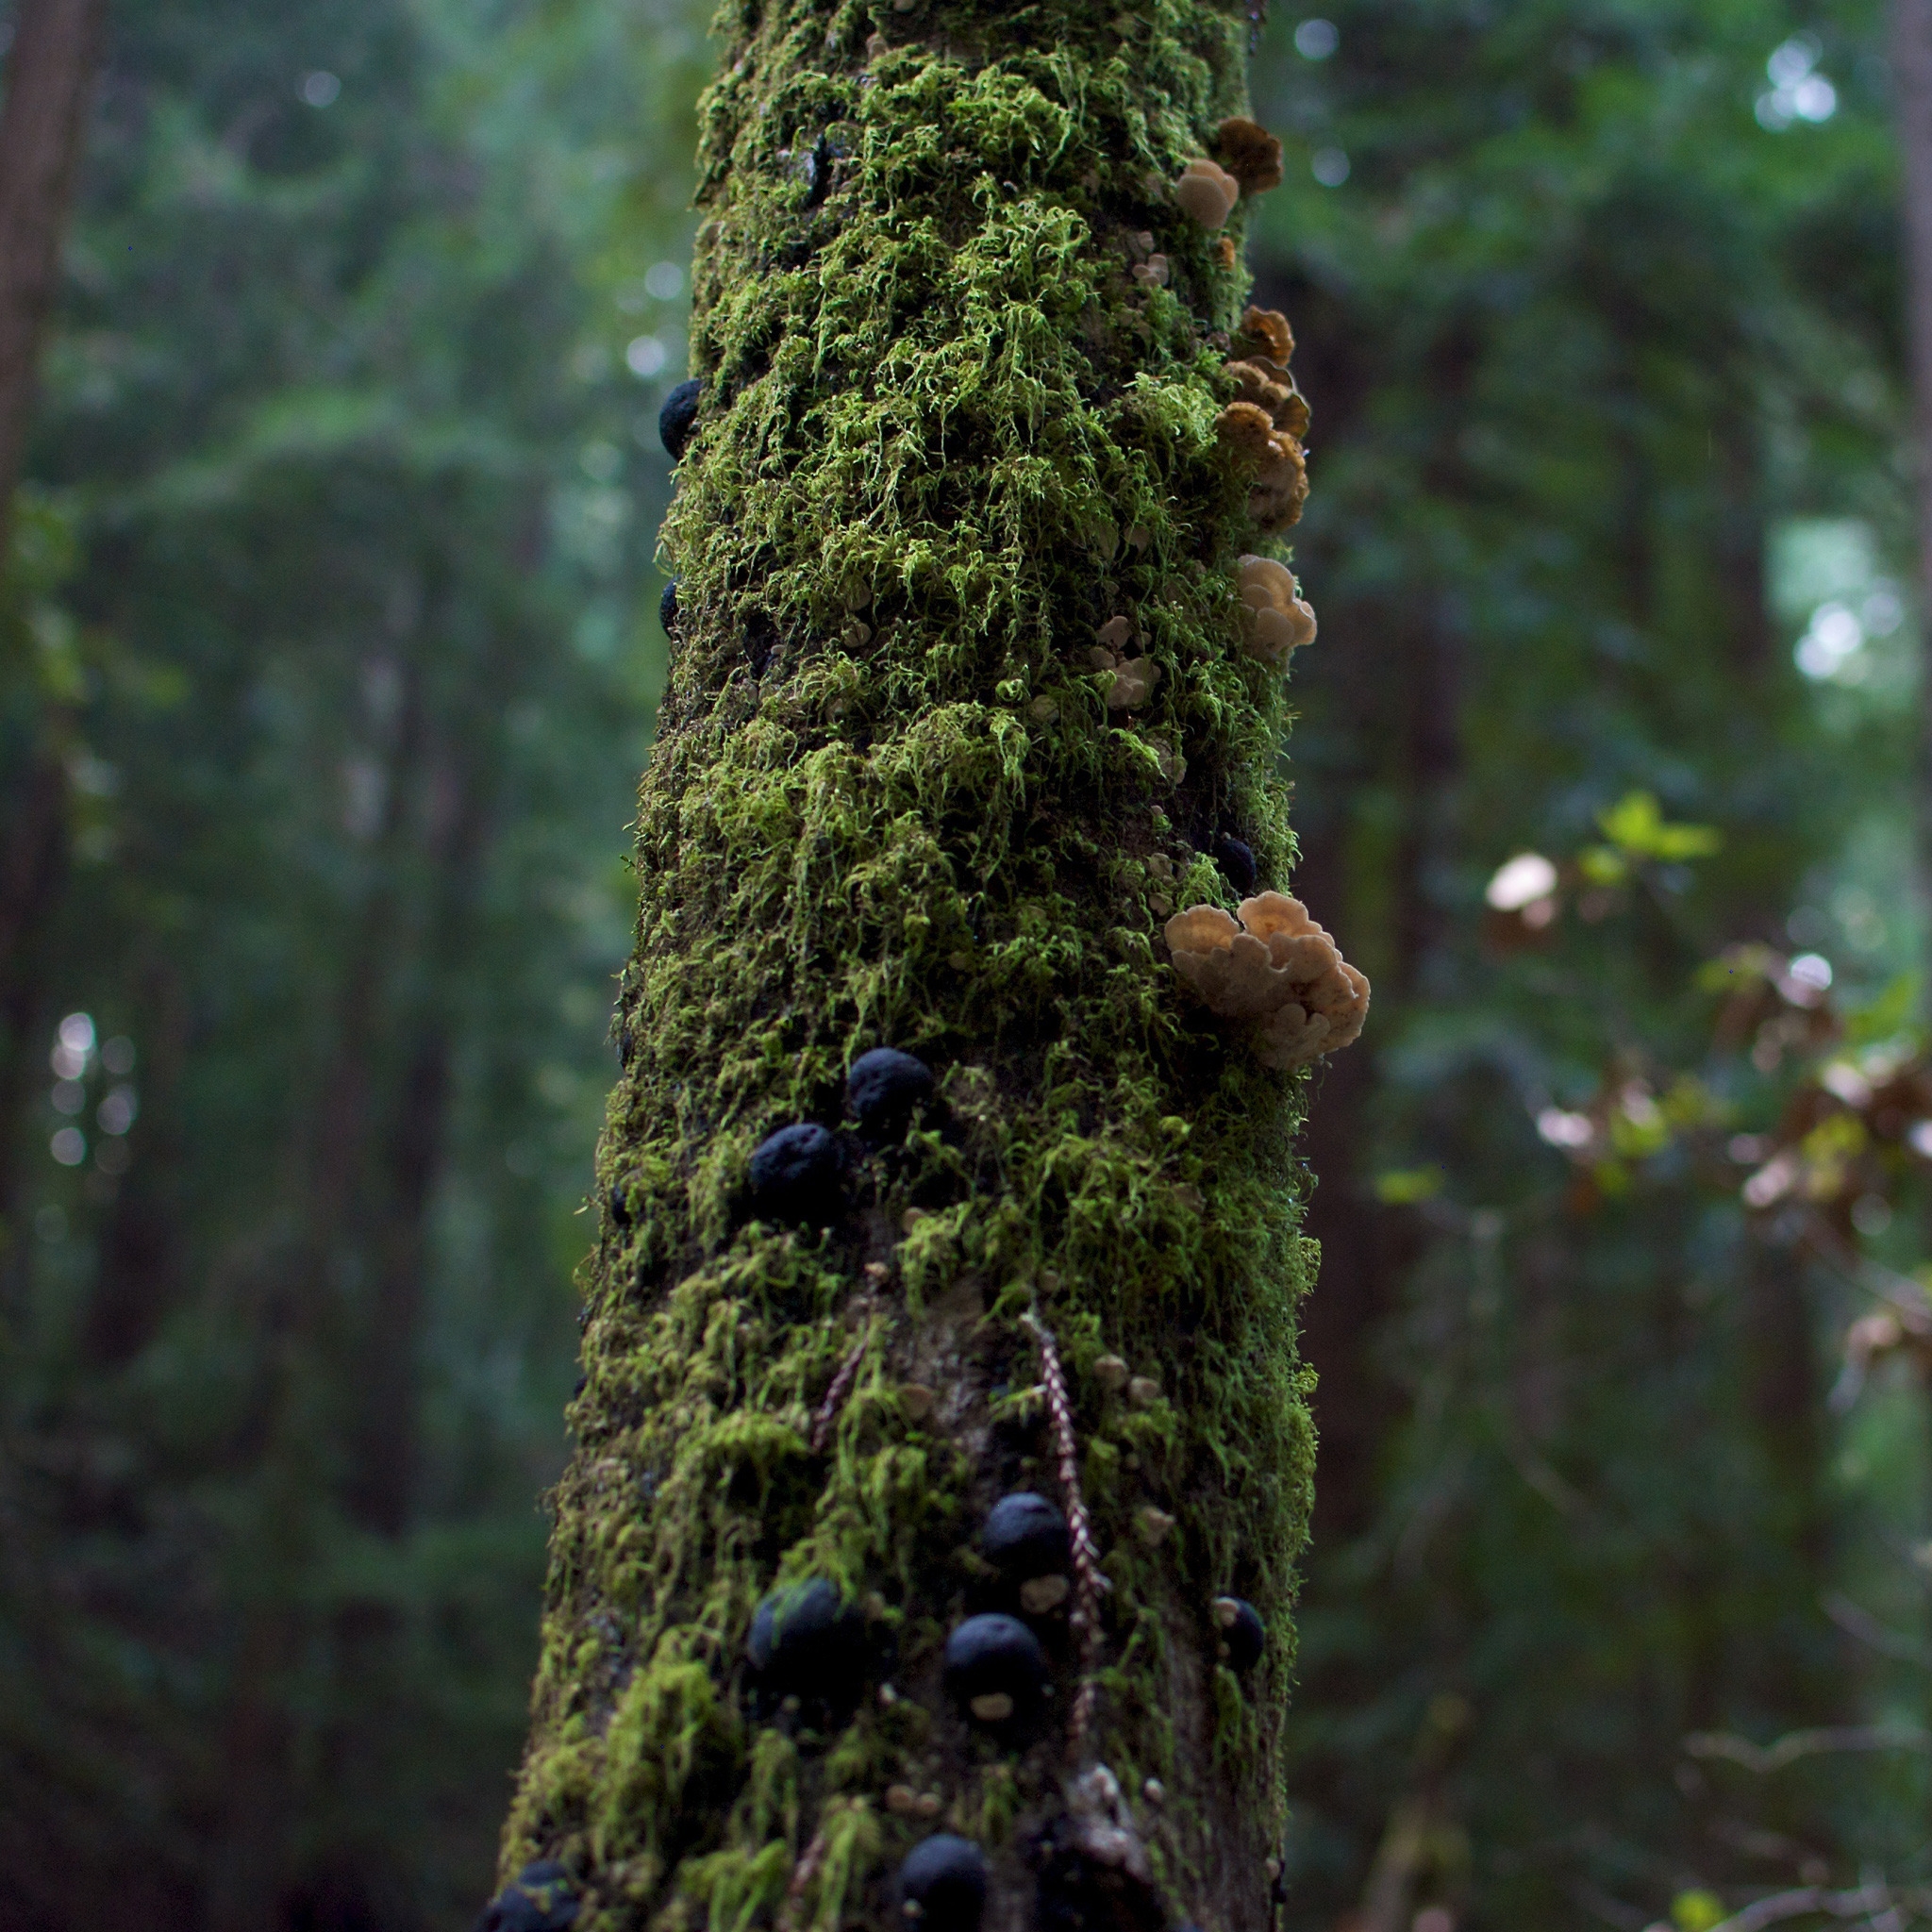 Tree Moss and Mushrooms for 2048 x 2048 New iPad resolution